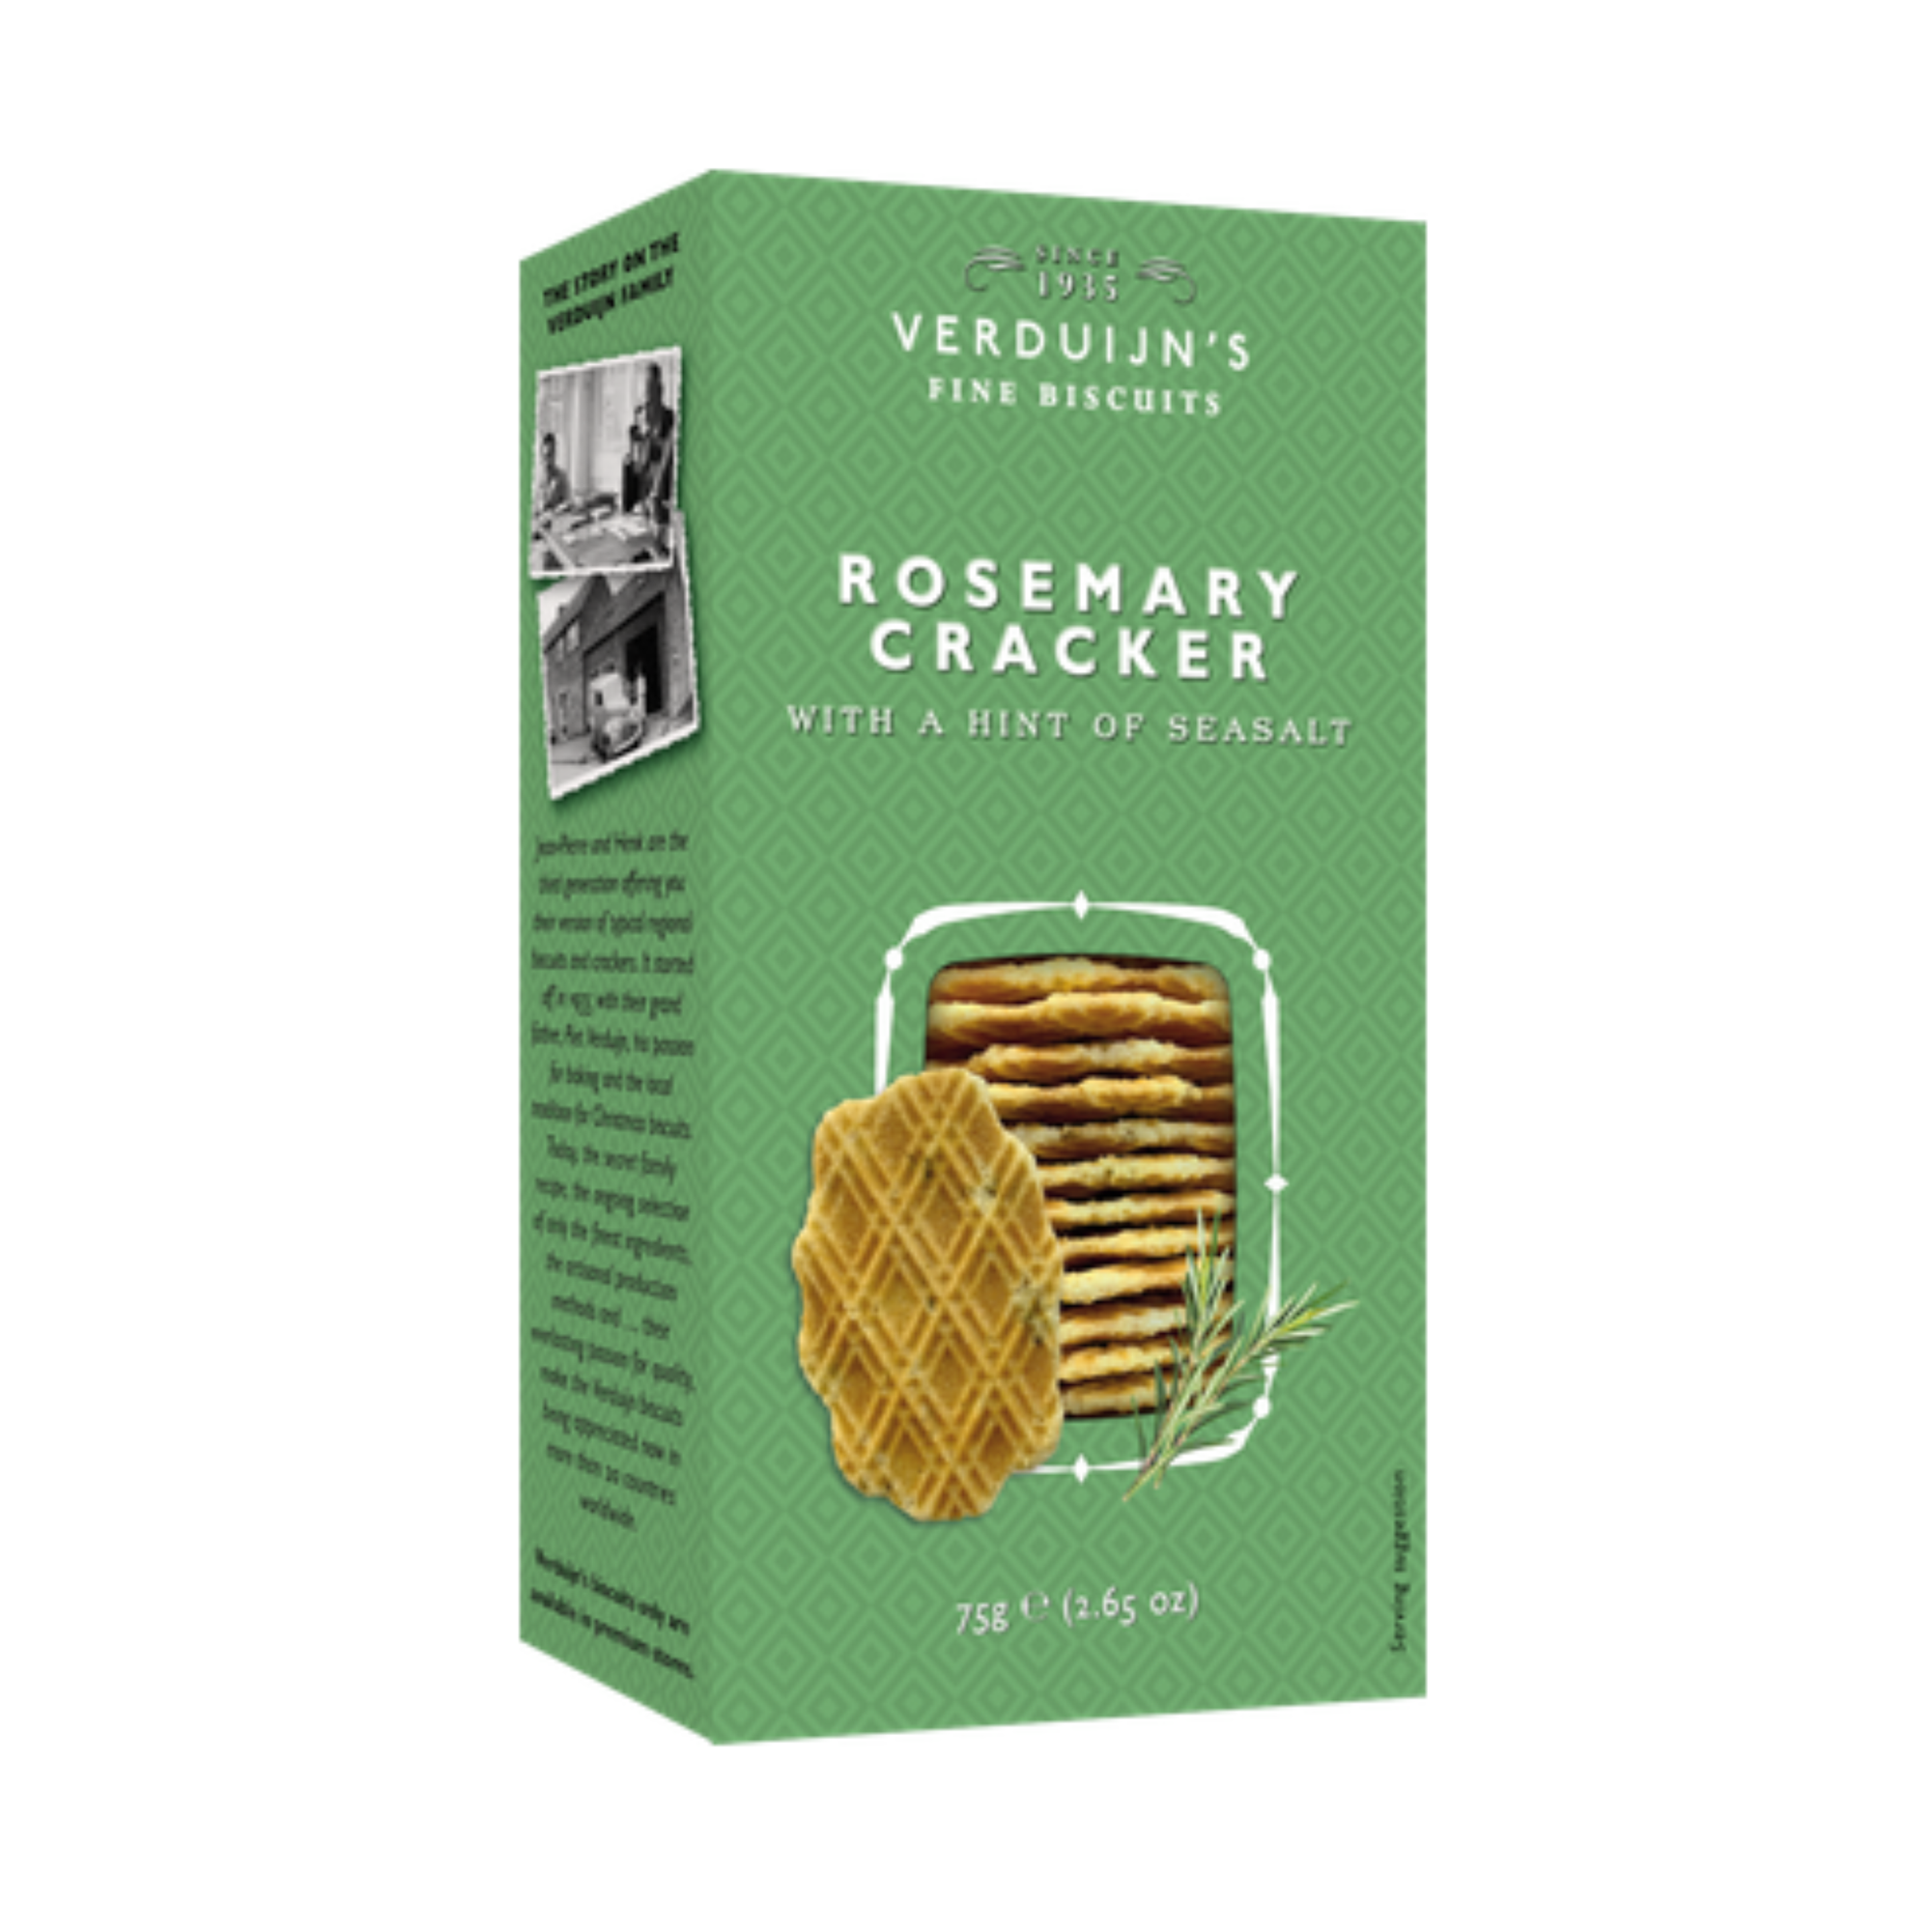 Verduijn's Rosemary Cracker with a Hint of Sea Salt